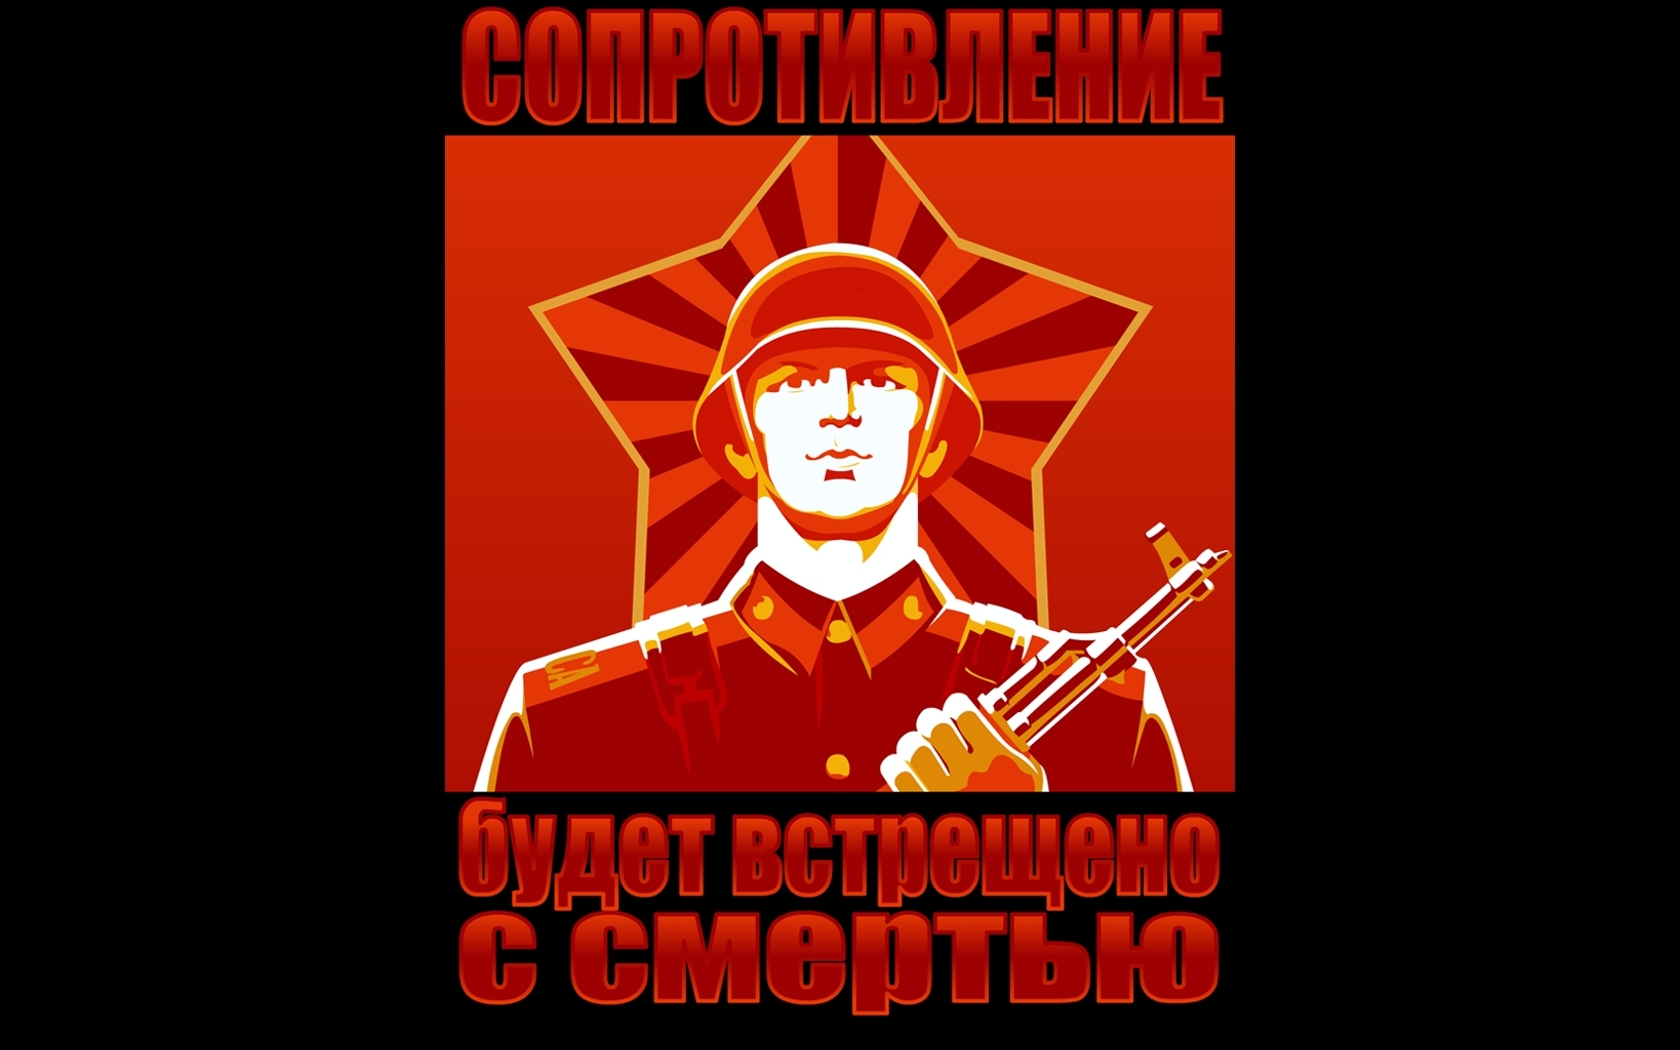 Cccp Ussr Munism Propaganda Red Wallpaper Hq